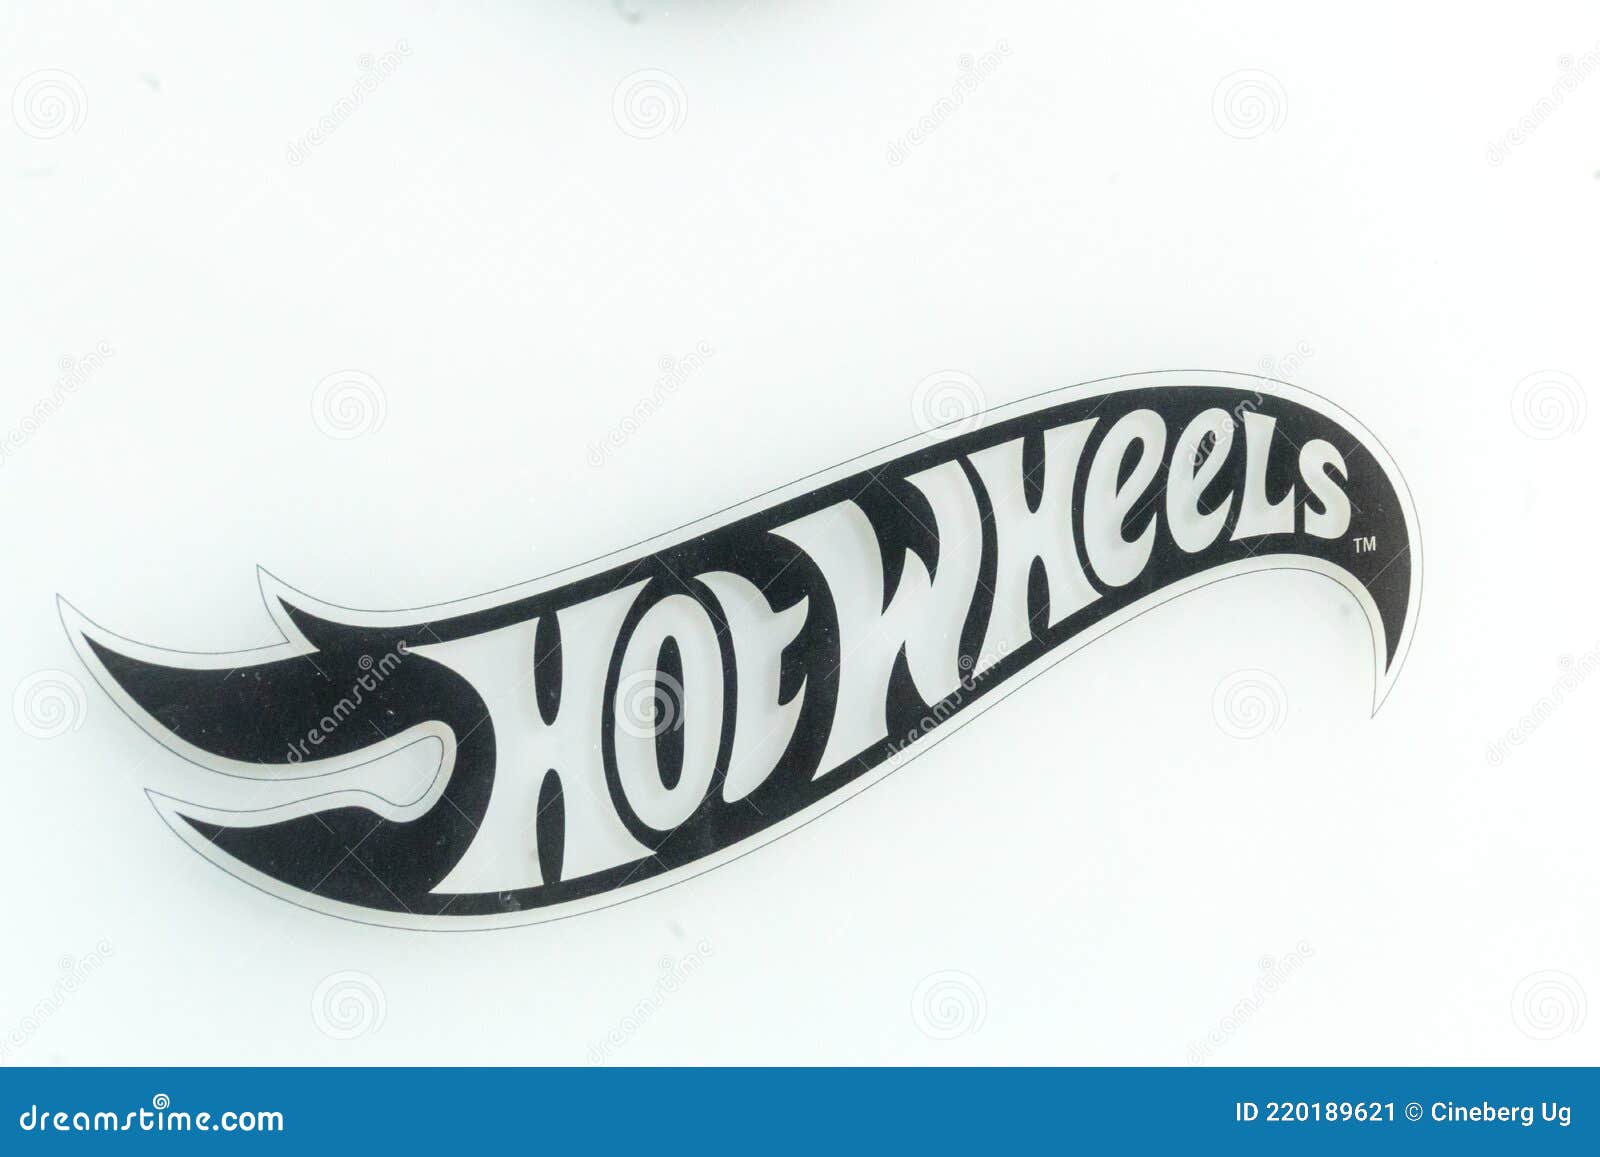 How to Draw the Hot Wheels Logo | Wheel logo, Hot wheels, Easy drawings